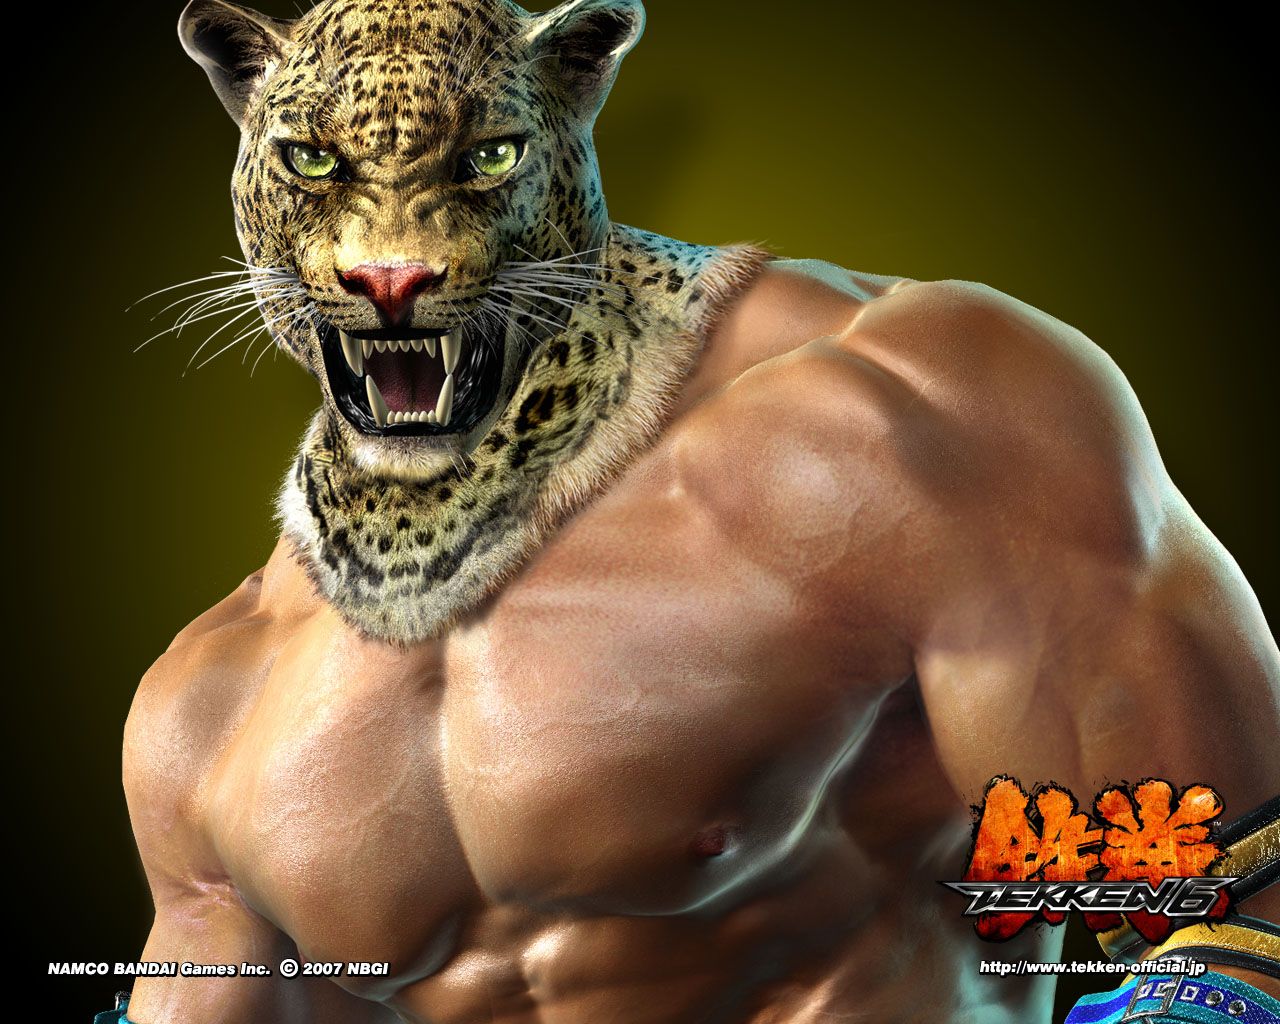 King Tekken 6 Wallpapers HD Backgrounds